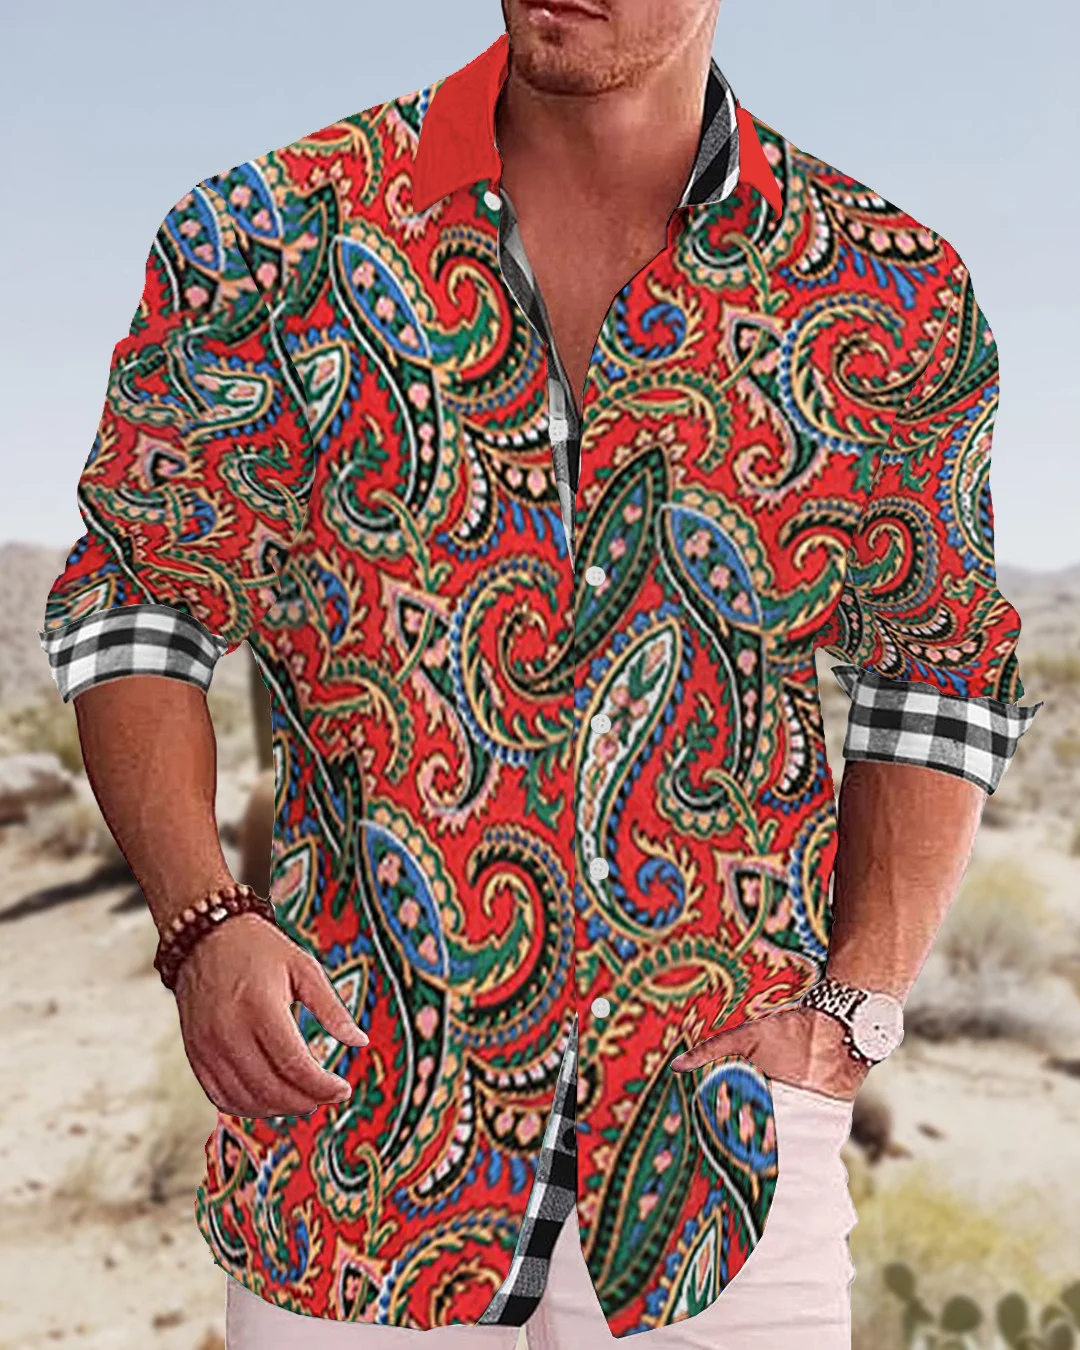 Men's cotton&linen long-sleeved fashion casual shirt 6e6a